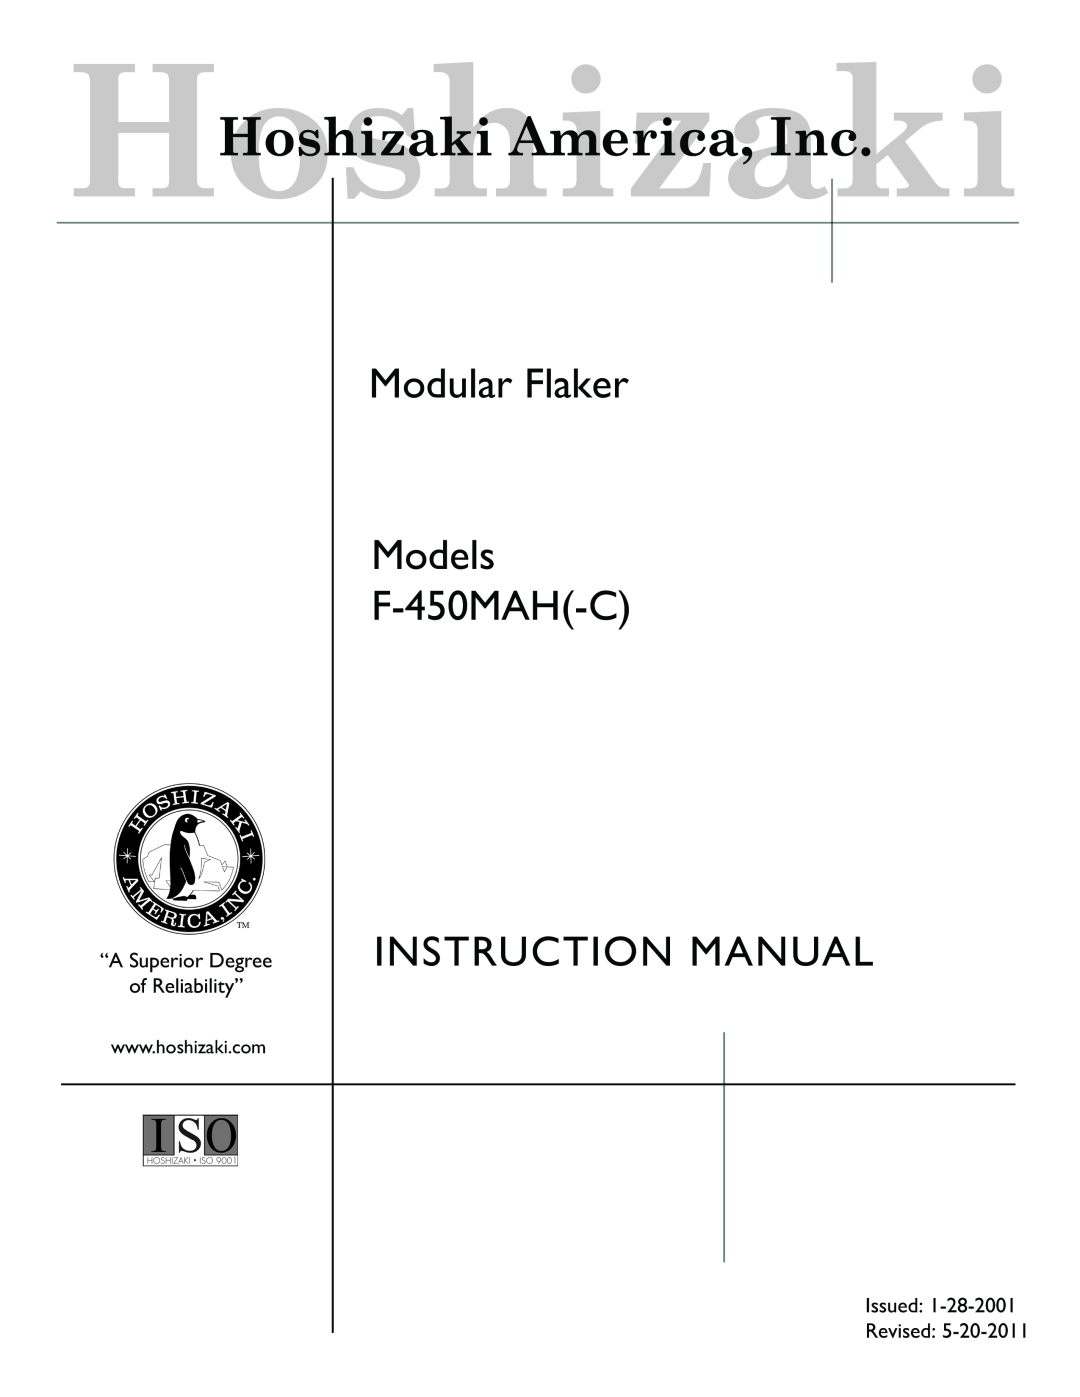 Hoshizaki F-450MAH(-C) instruction manual Modular Flaker Models F-450MAH-C, HoshizakiHoshizaki America, Inc 